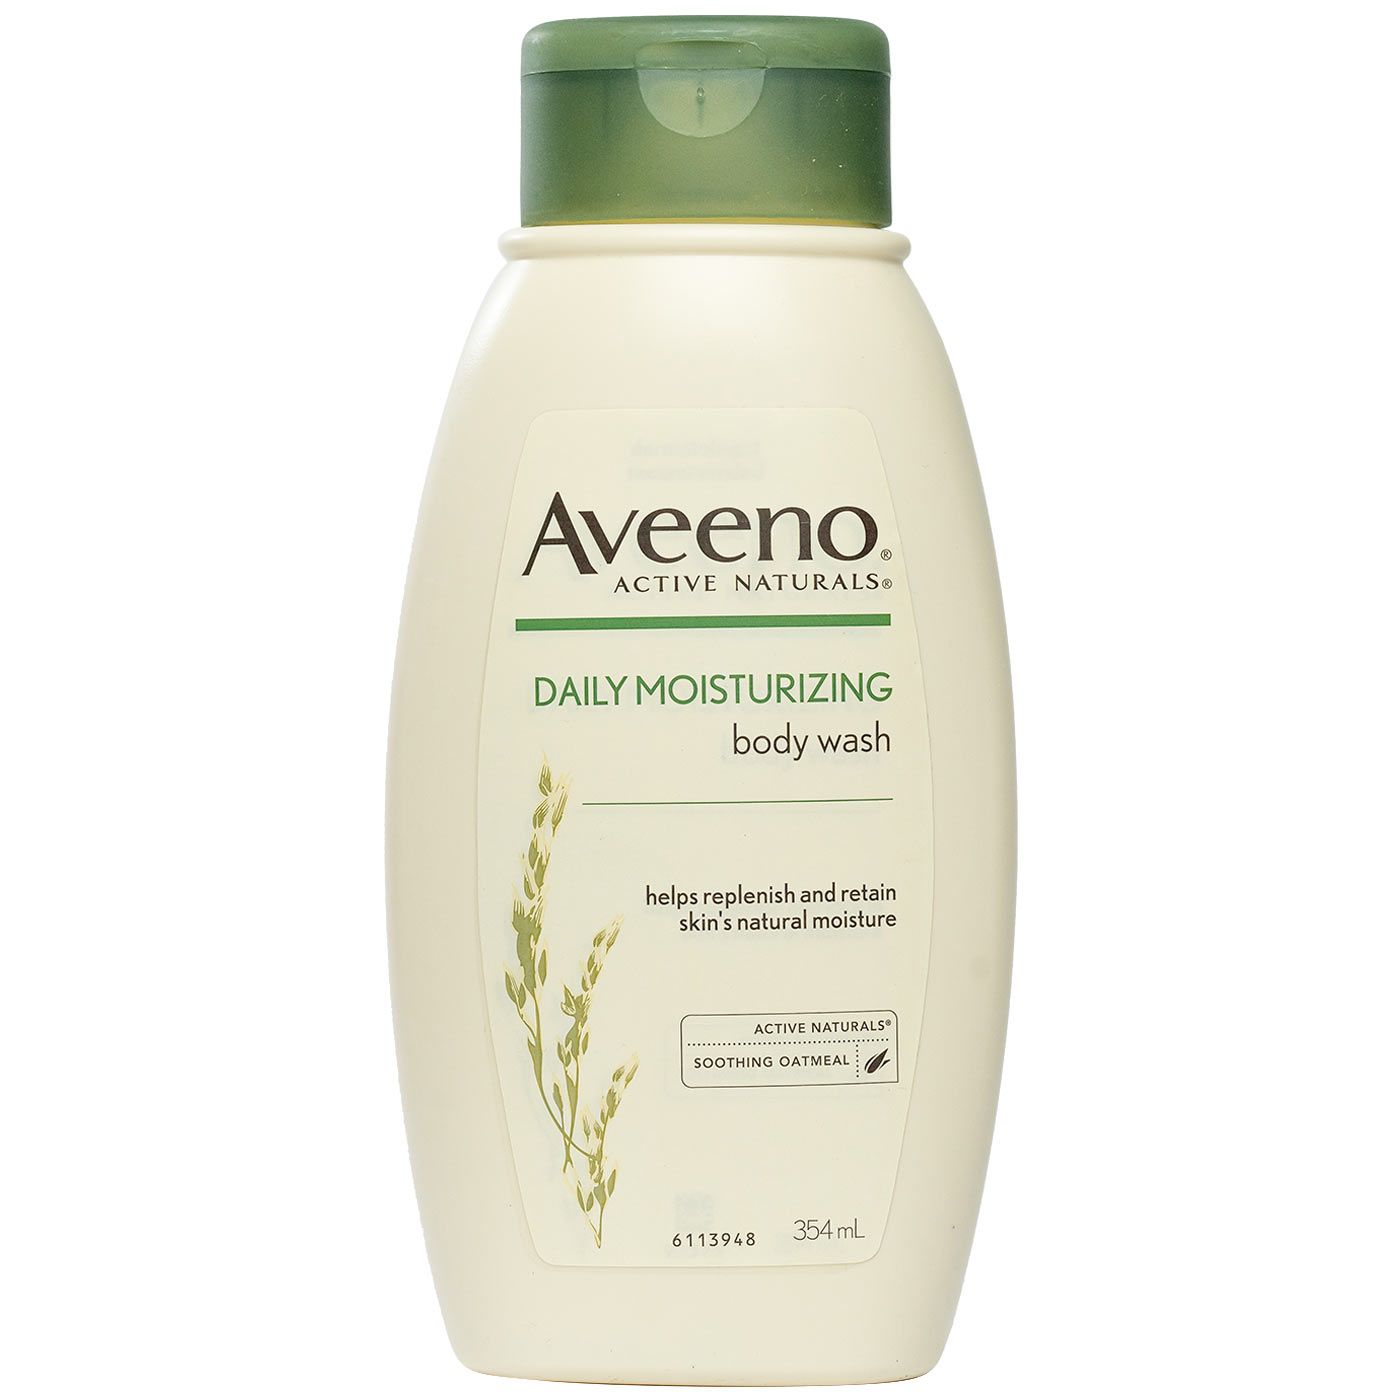 Aveeno Daily Moisturizing Body Wash 354ml - 2